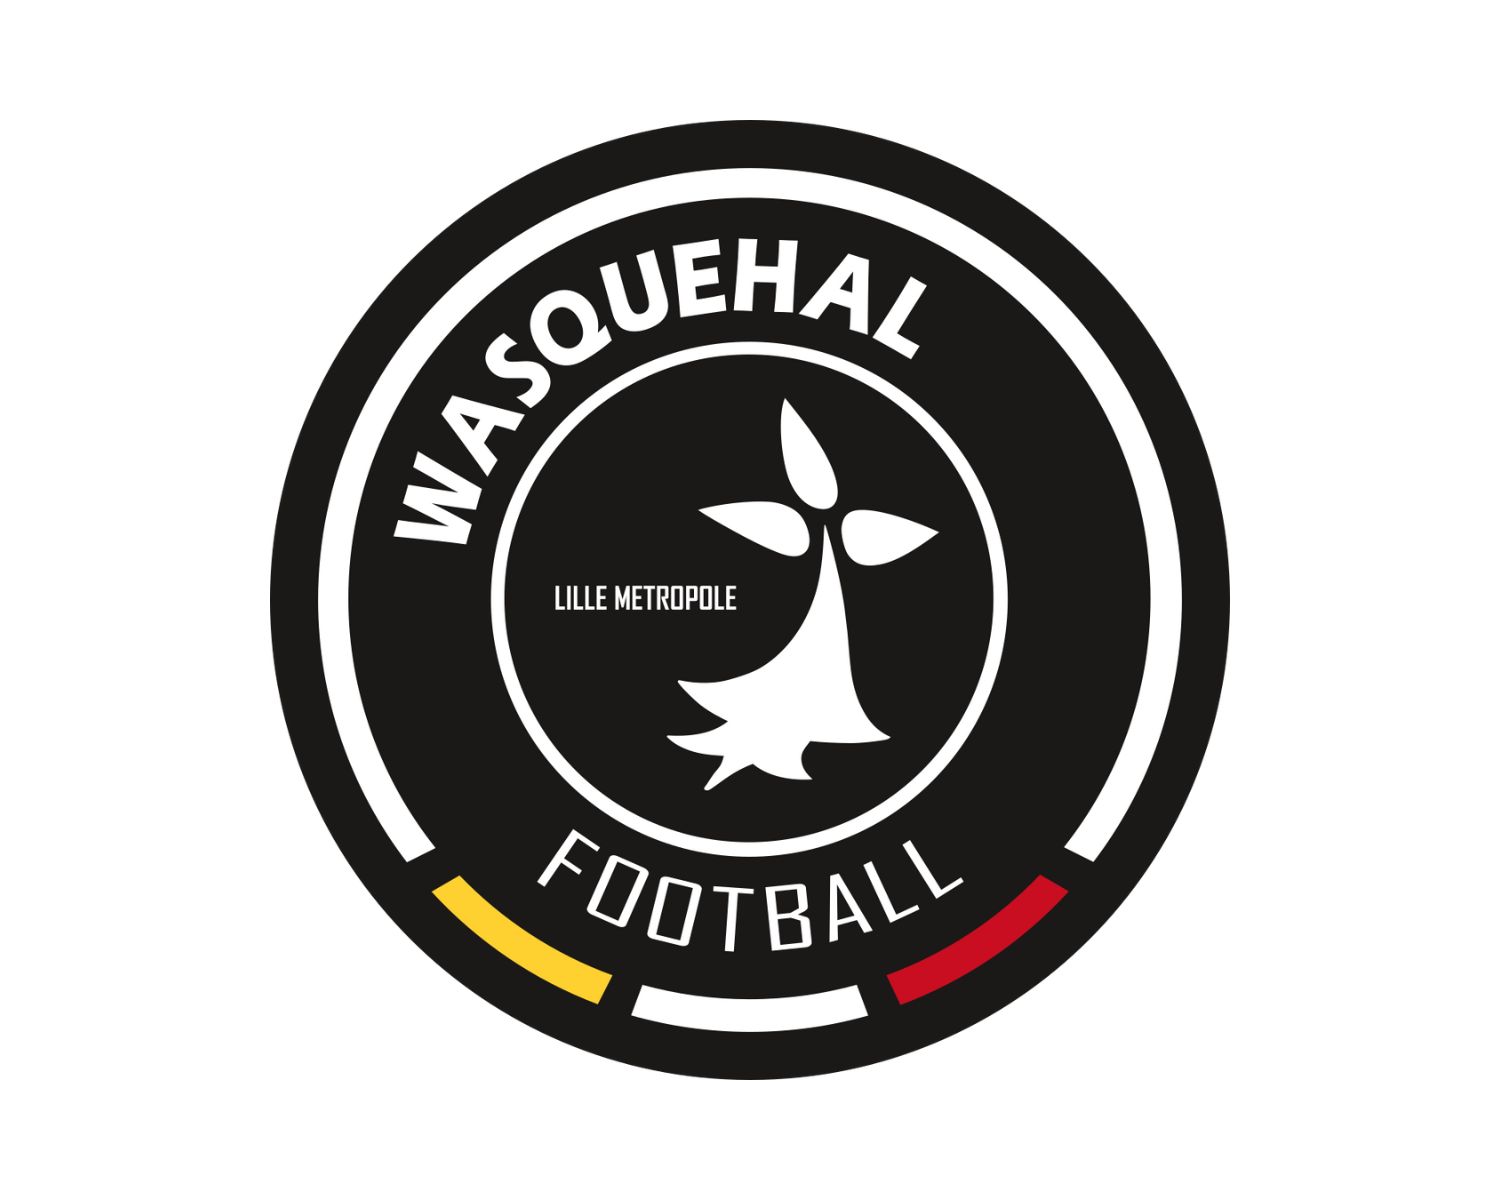 es-wasquehal-23-football-club-facts